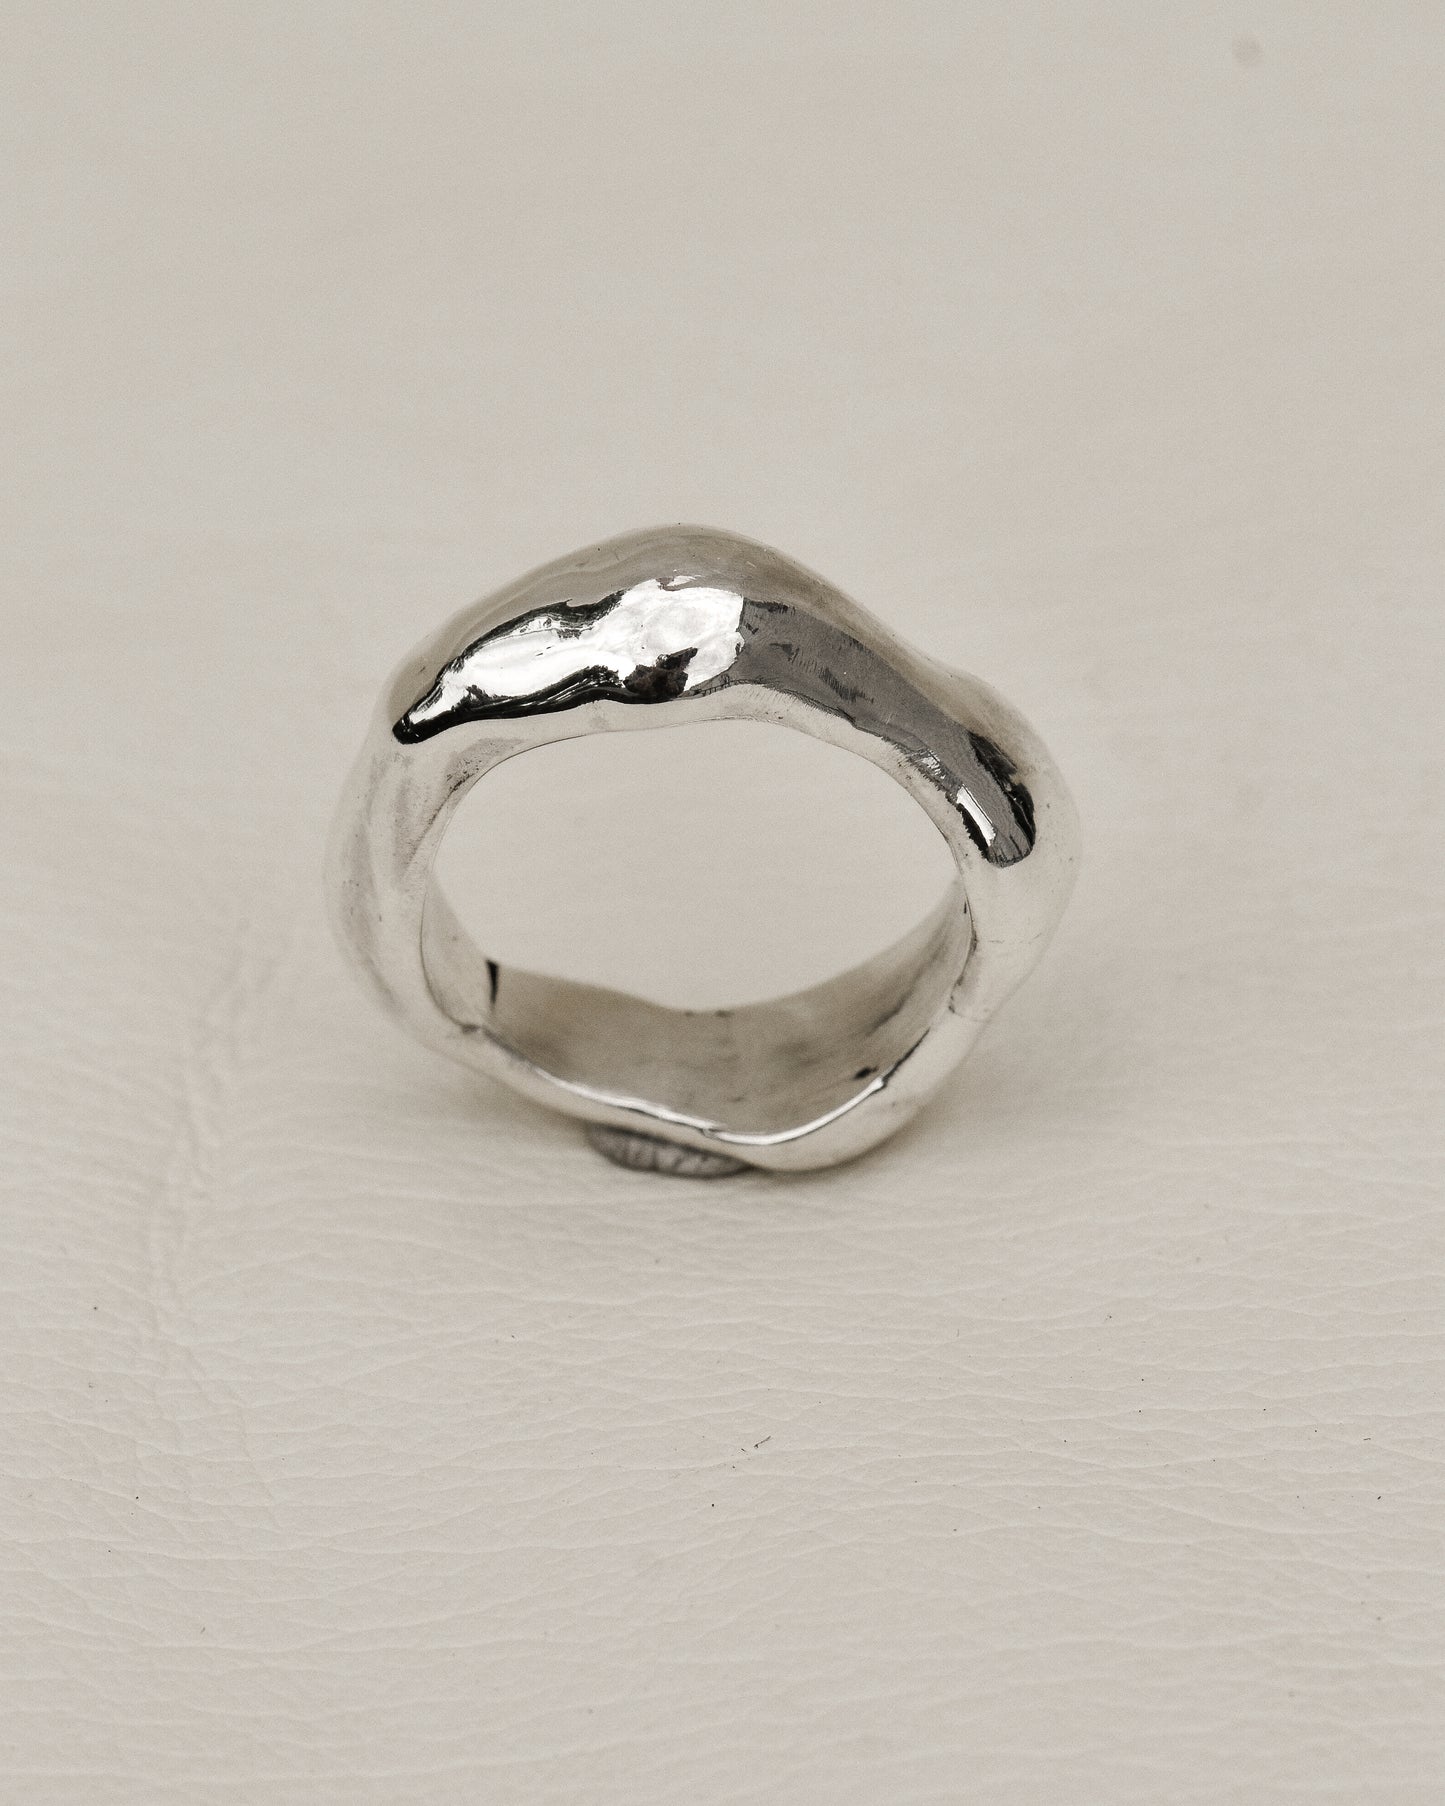 The Morph Ring